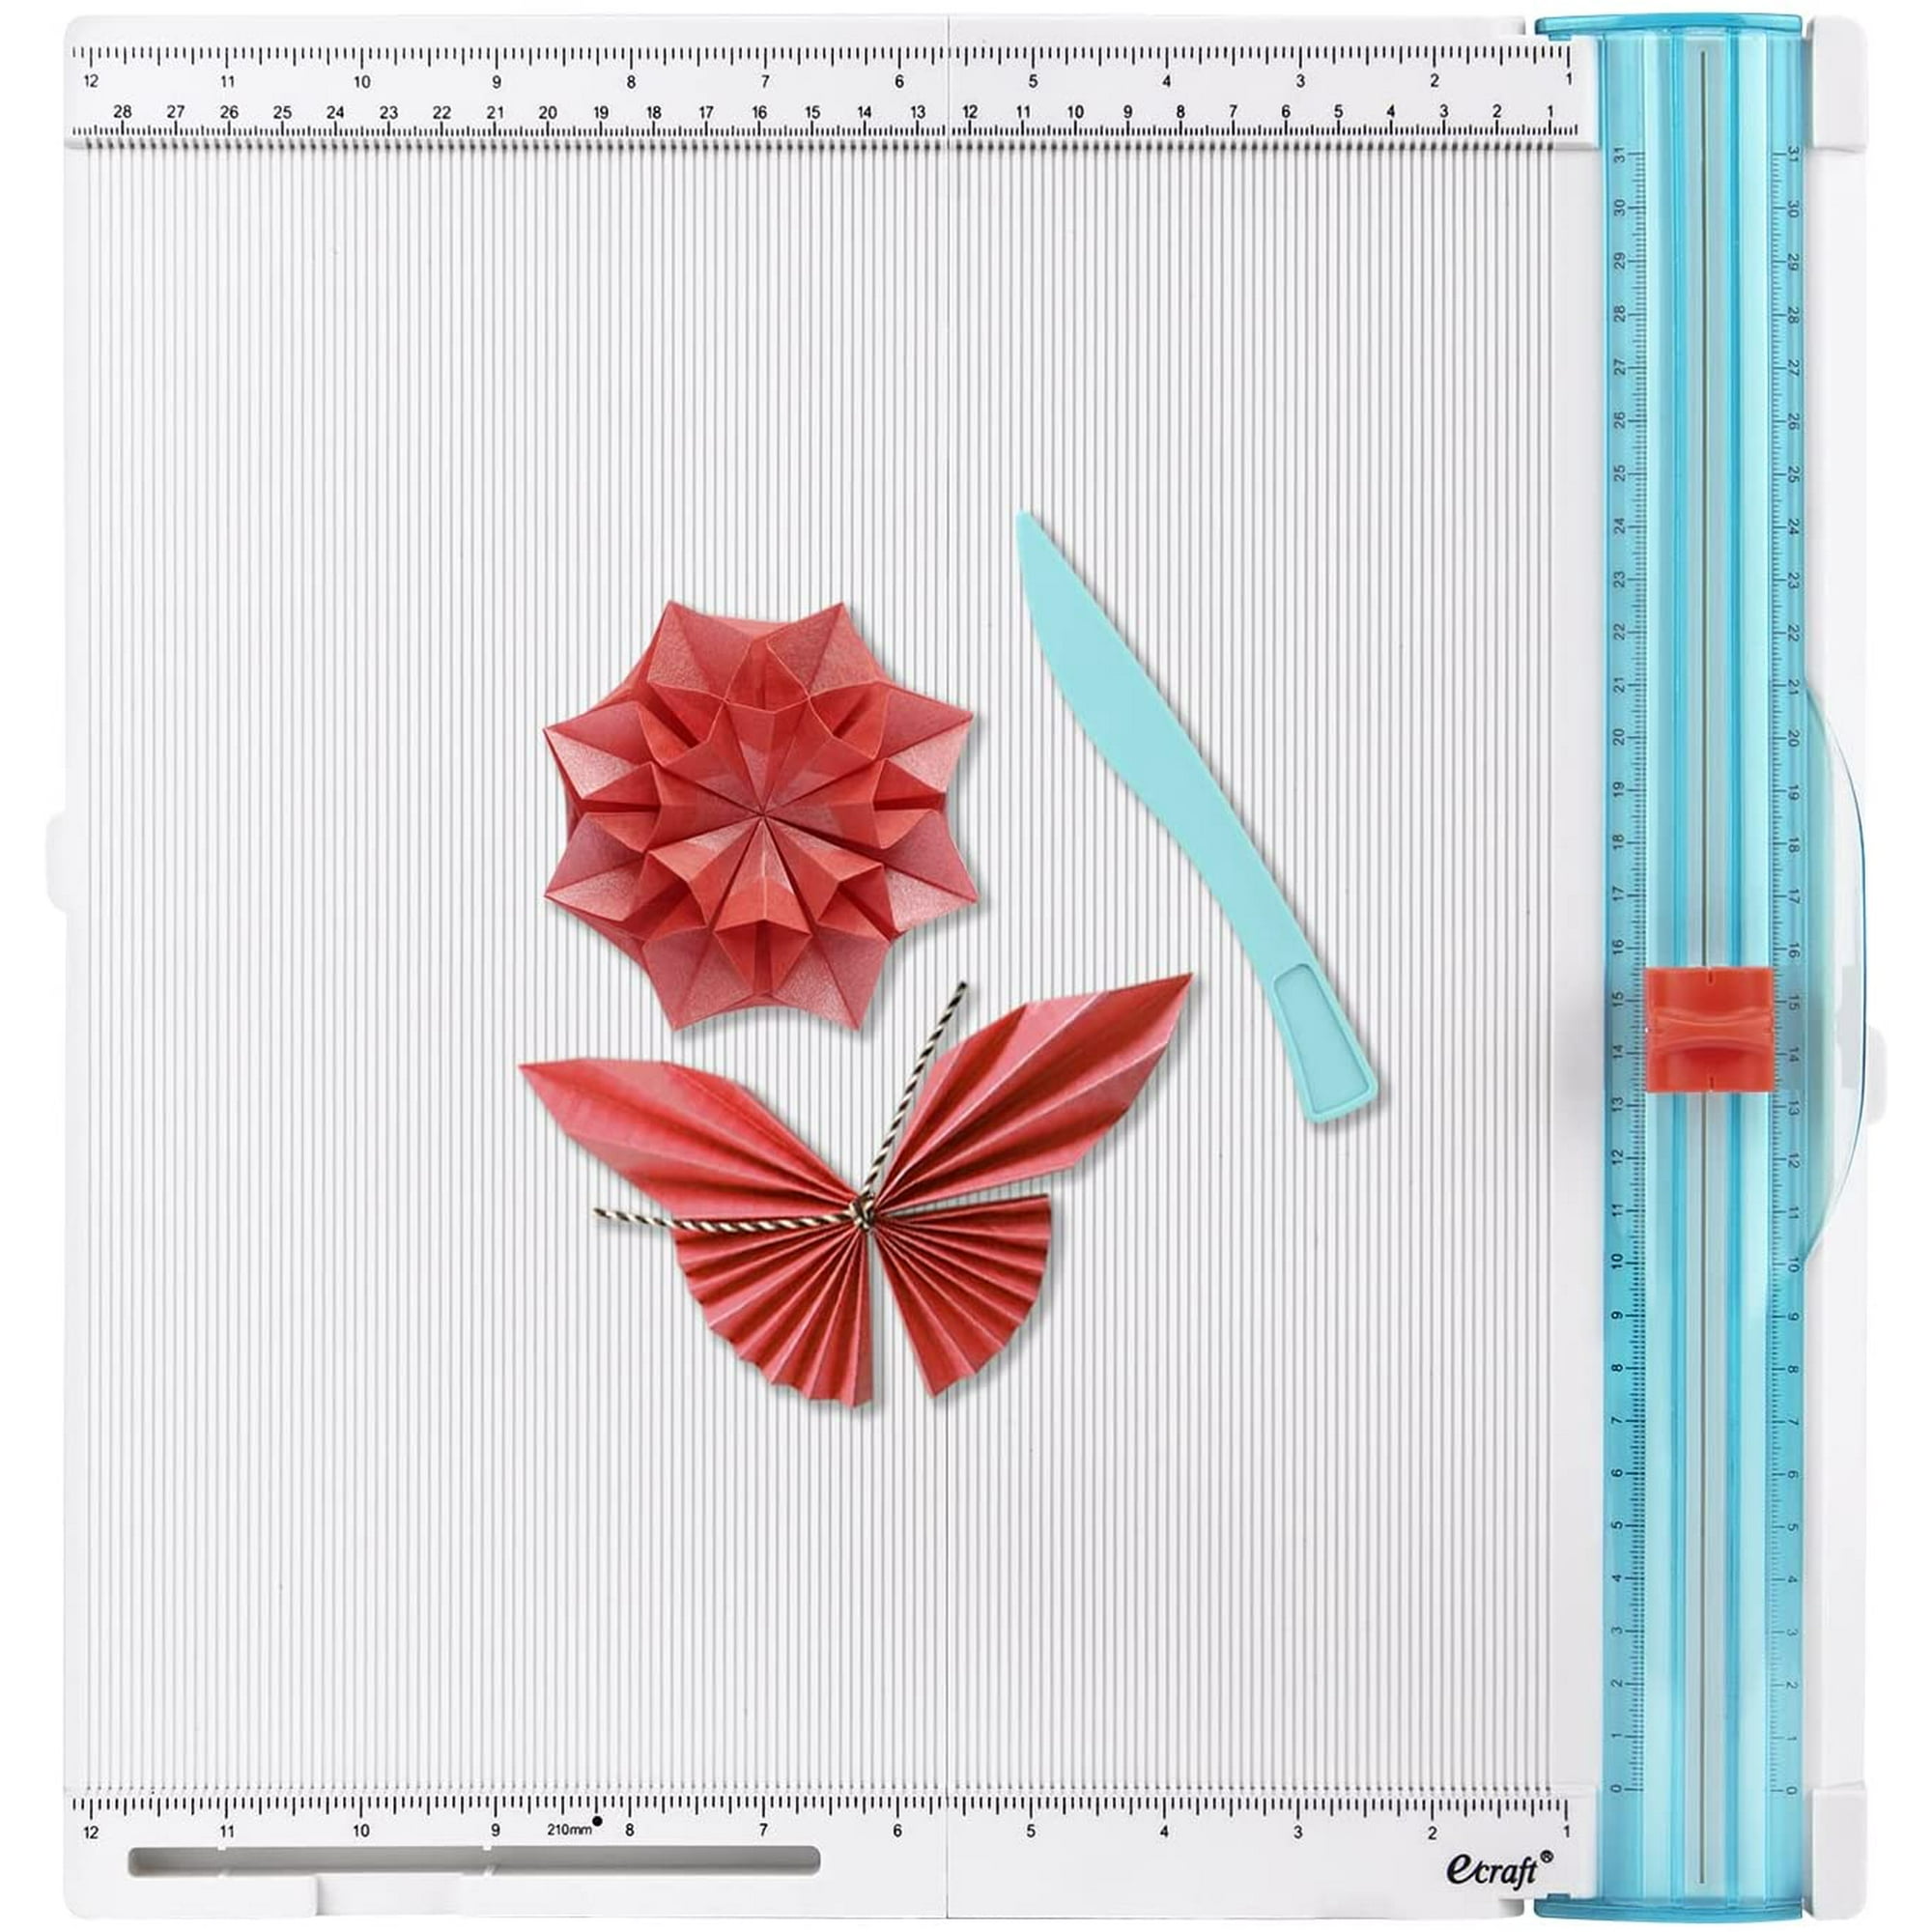 Craft Paper Trimmer Scoring Board: 12 x 12inch Paper Trim Score Board by ecraft, Scoring Tool with Paper | Walmart